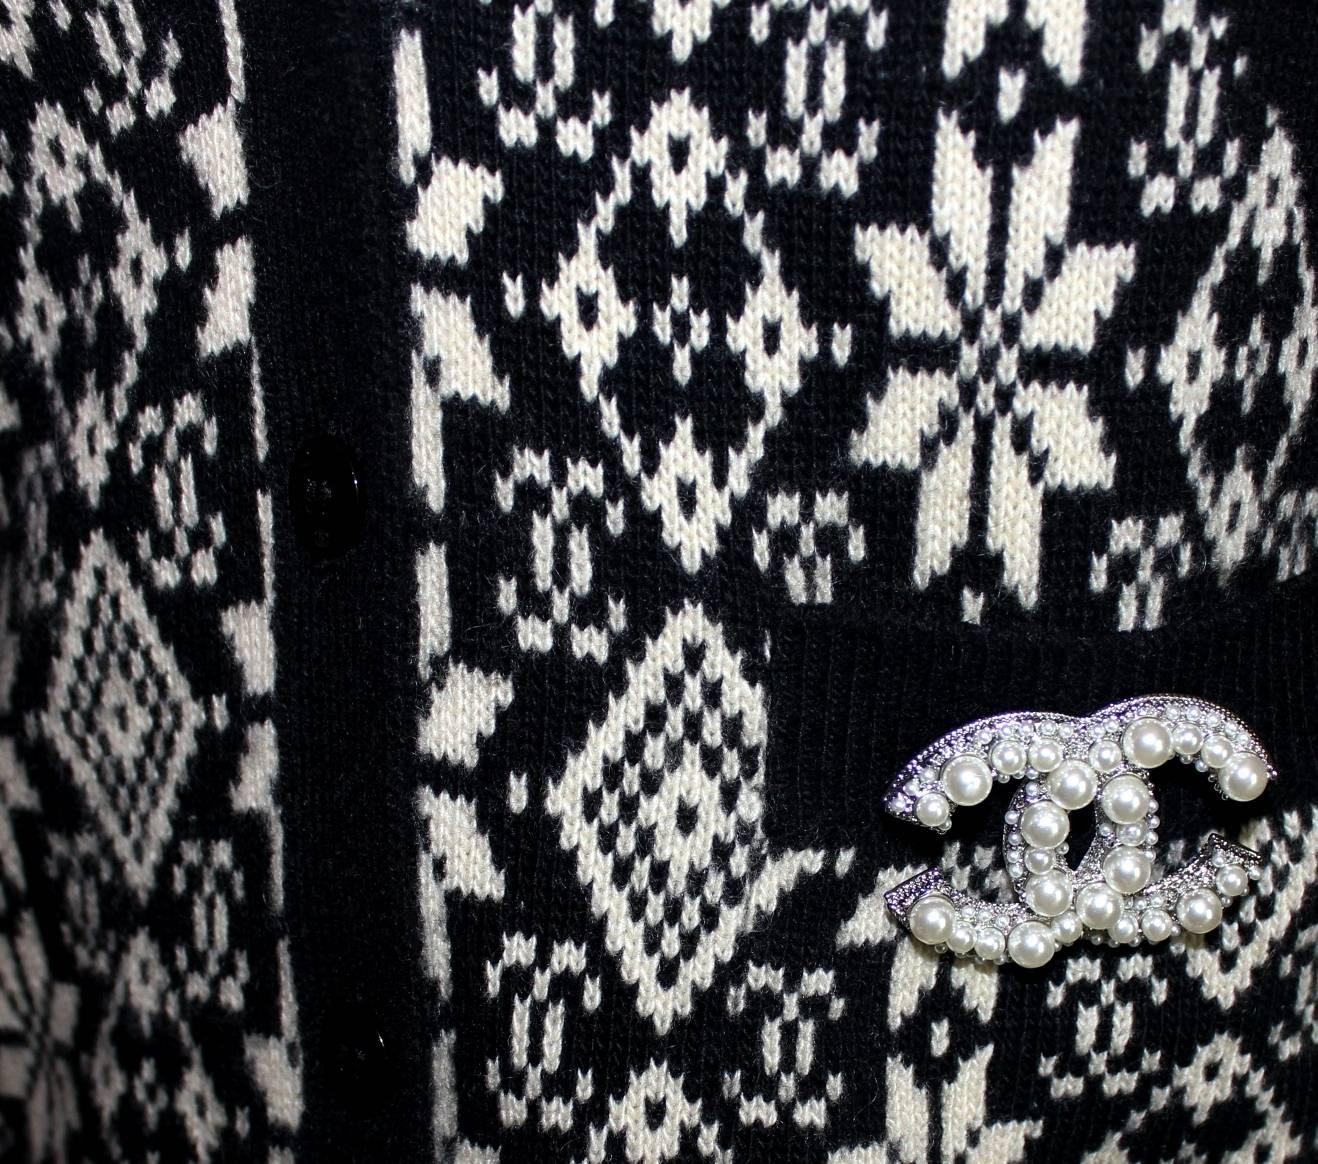 Black Chanel Monochrome CC Logo Intarsia Cashmere Knit Cardigan Jacket 38